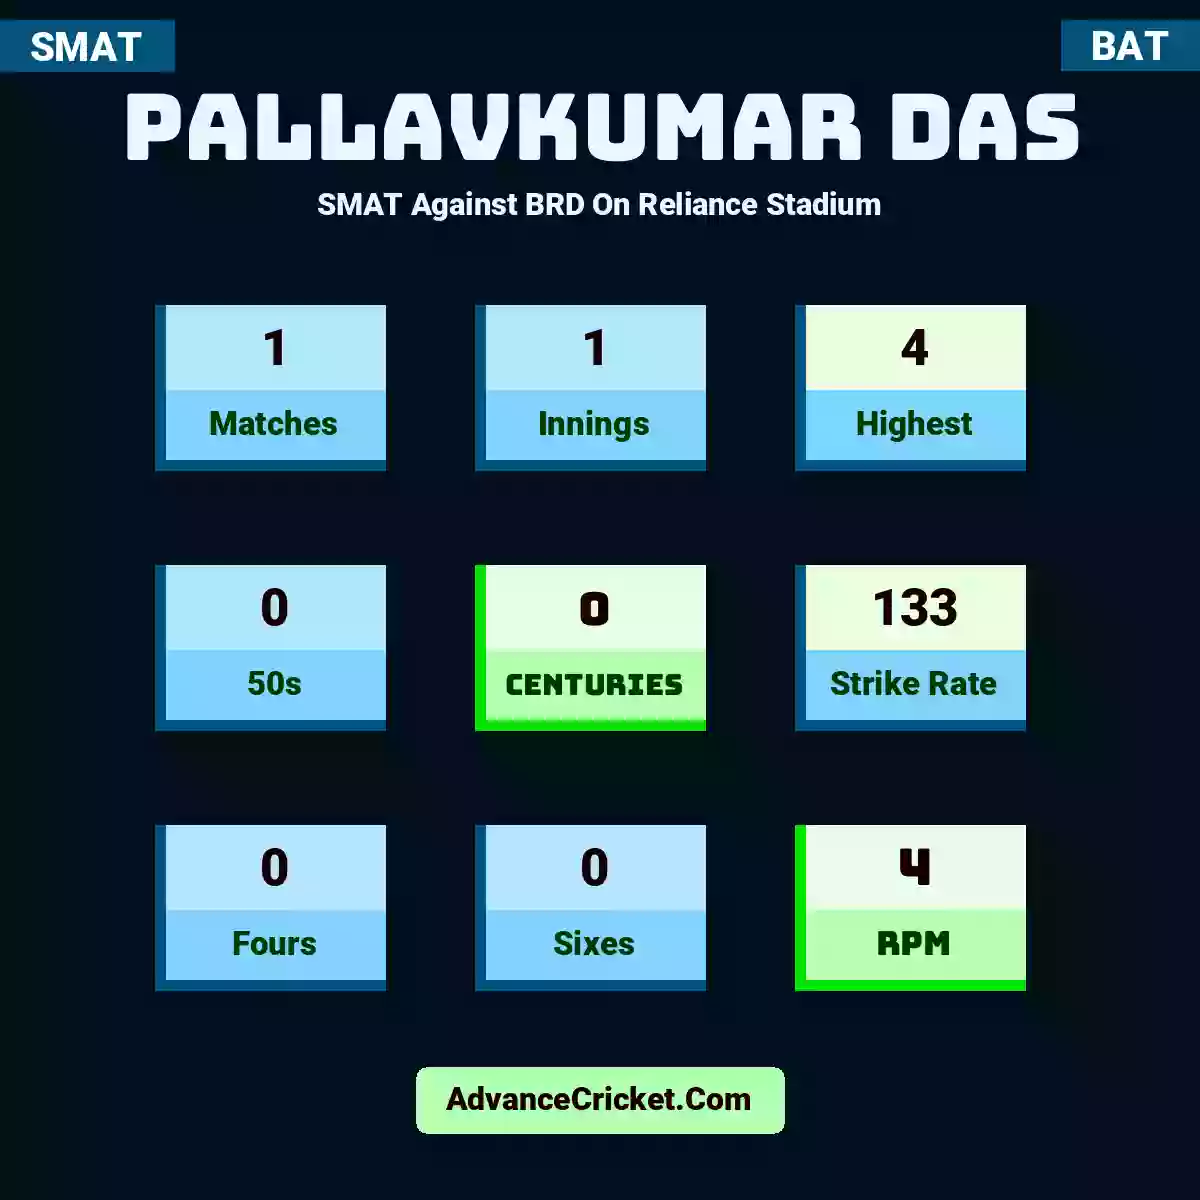 Pallavkumar Das SMAT  Against BRD On Reliance Stadium, Pallavkumar Das played 1 matches, scored 4 runs as highest, 0 half-centuries, and 0 centuries, with a strike rate of 133. P.Das hit 0 fours and 0 sixes, with an RPM of 4.